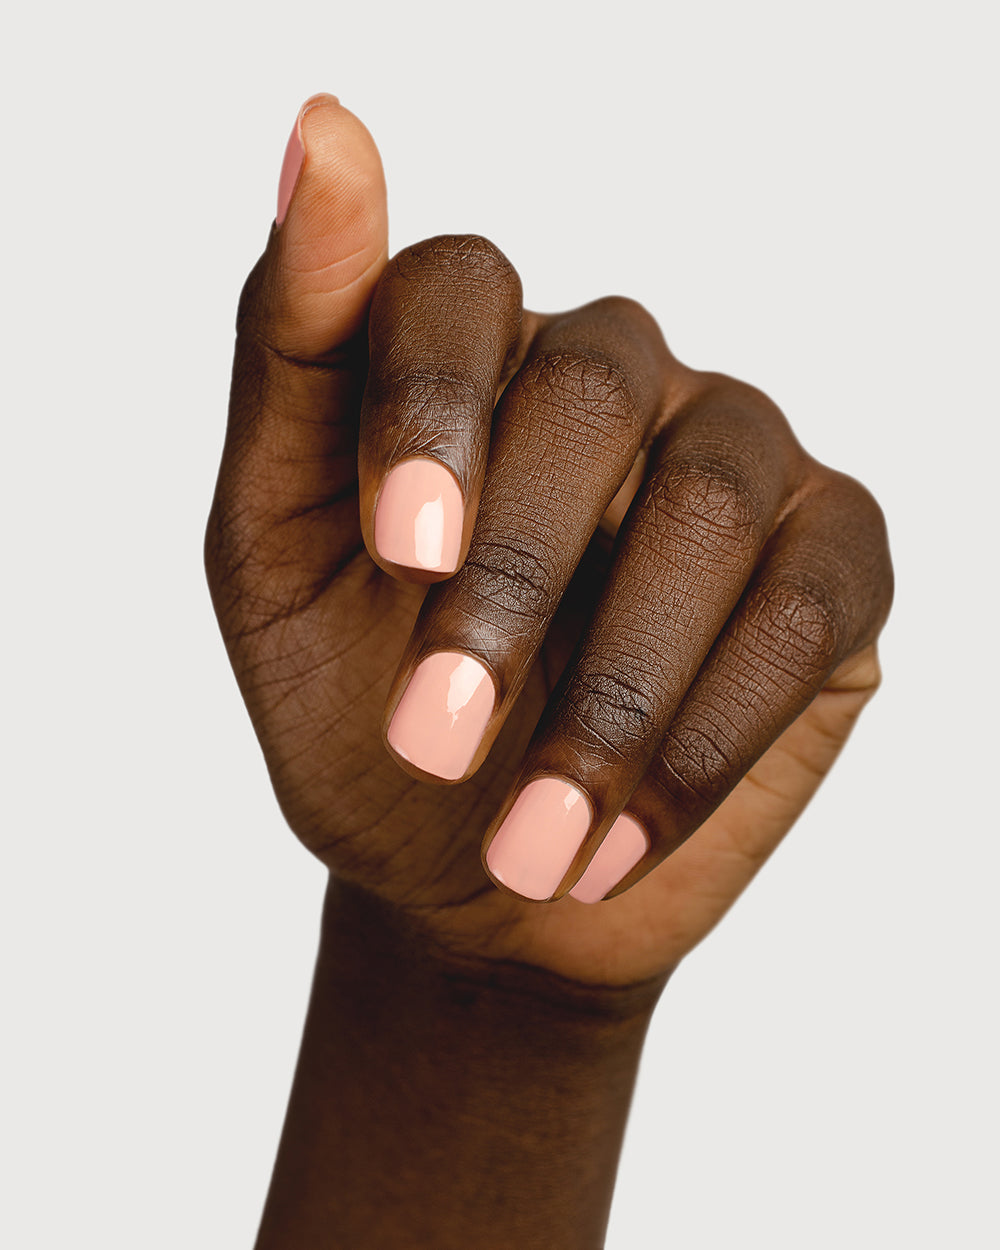 English rose nail polish hand swatch on dark skin tone